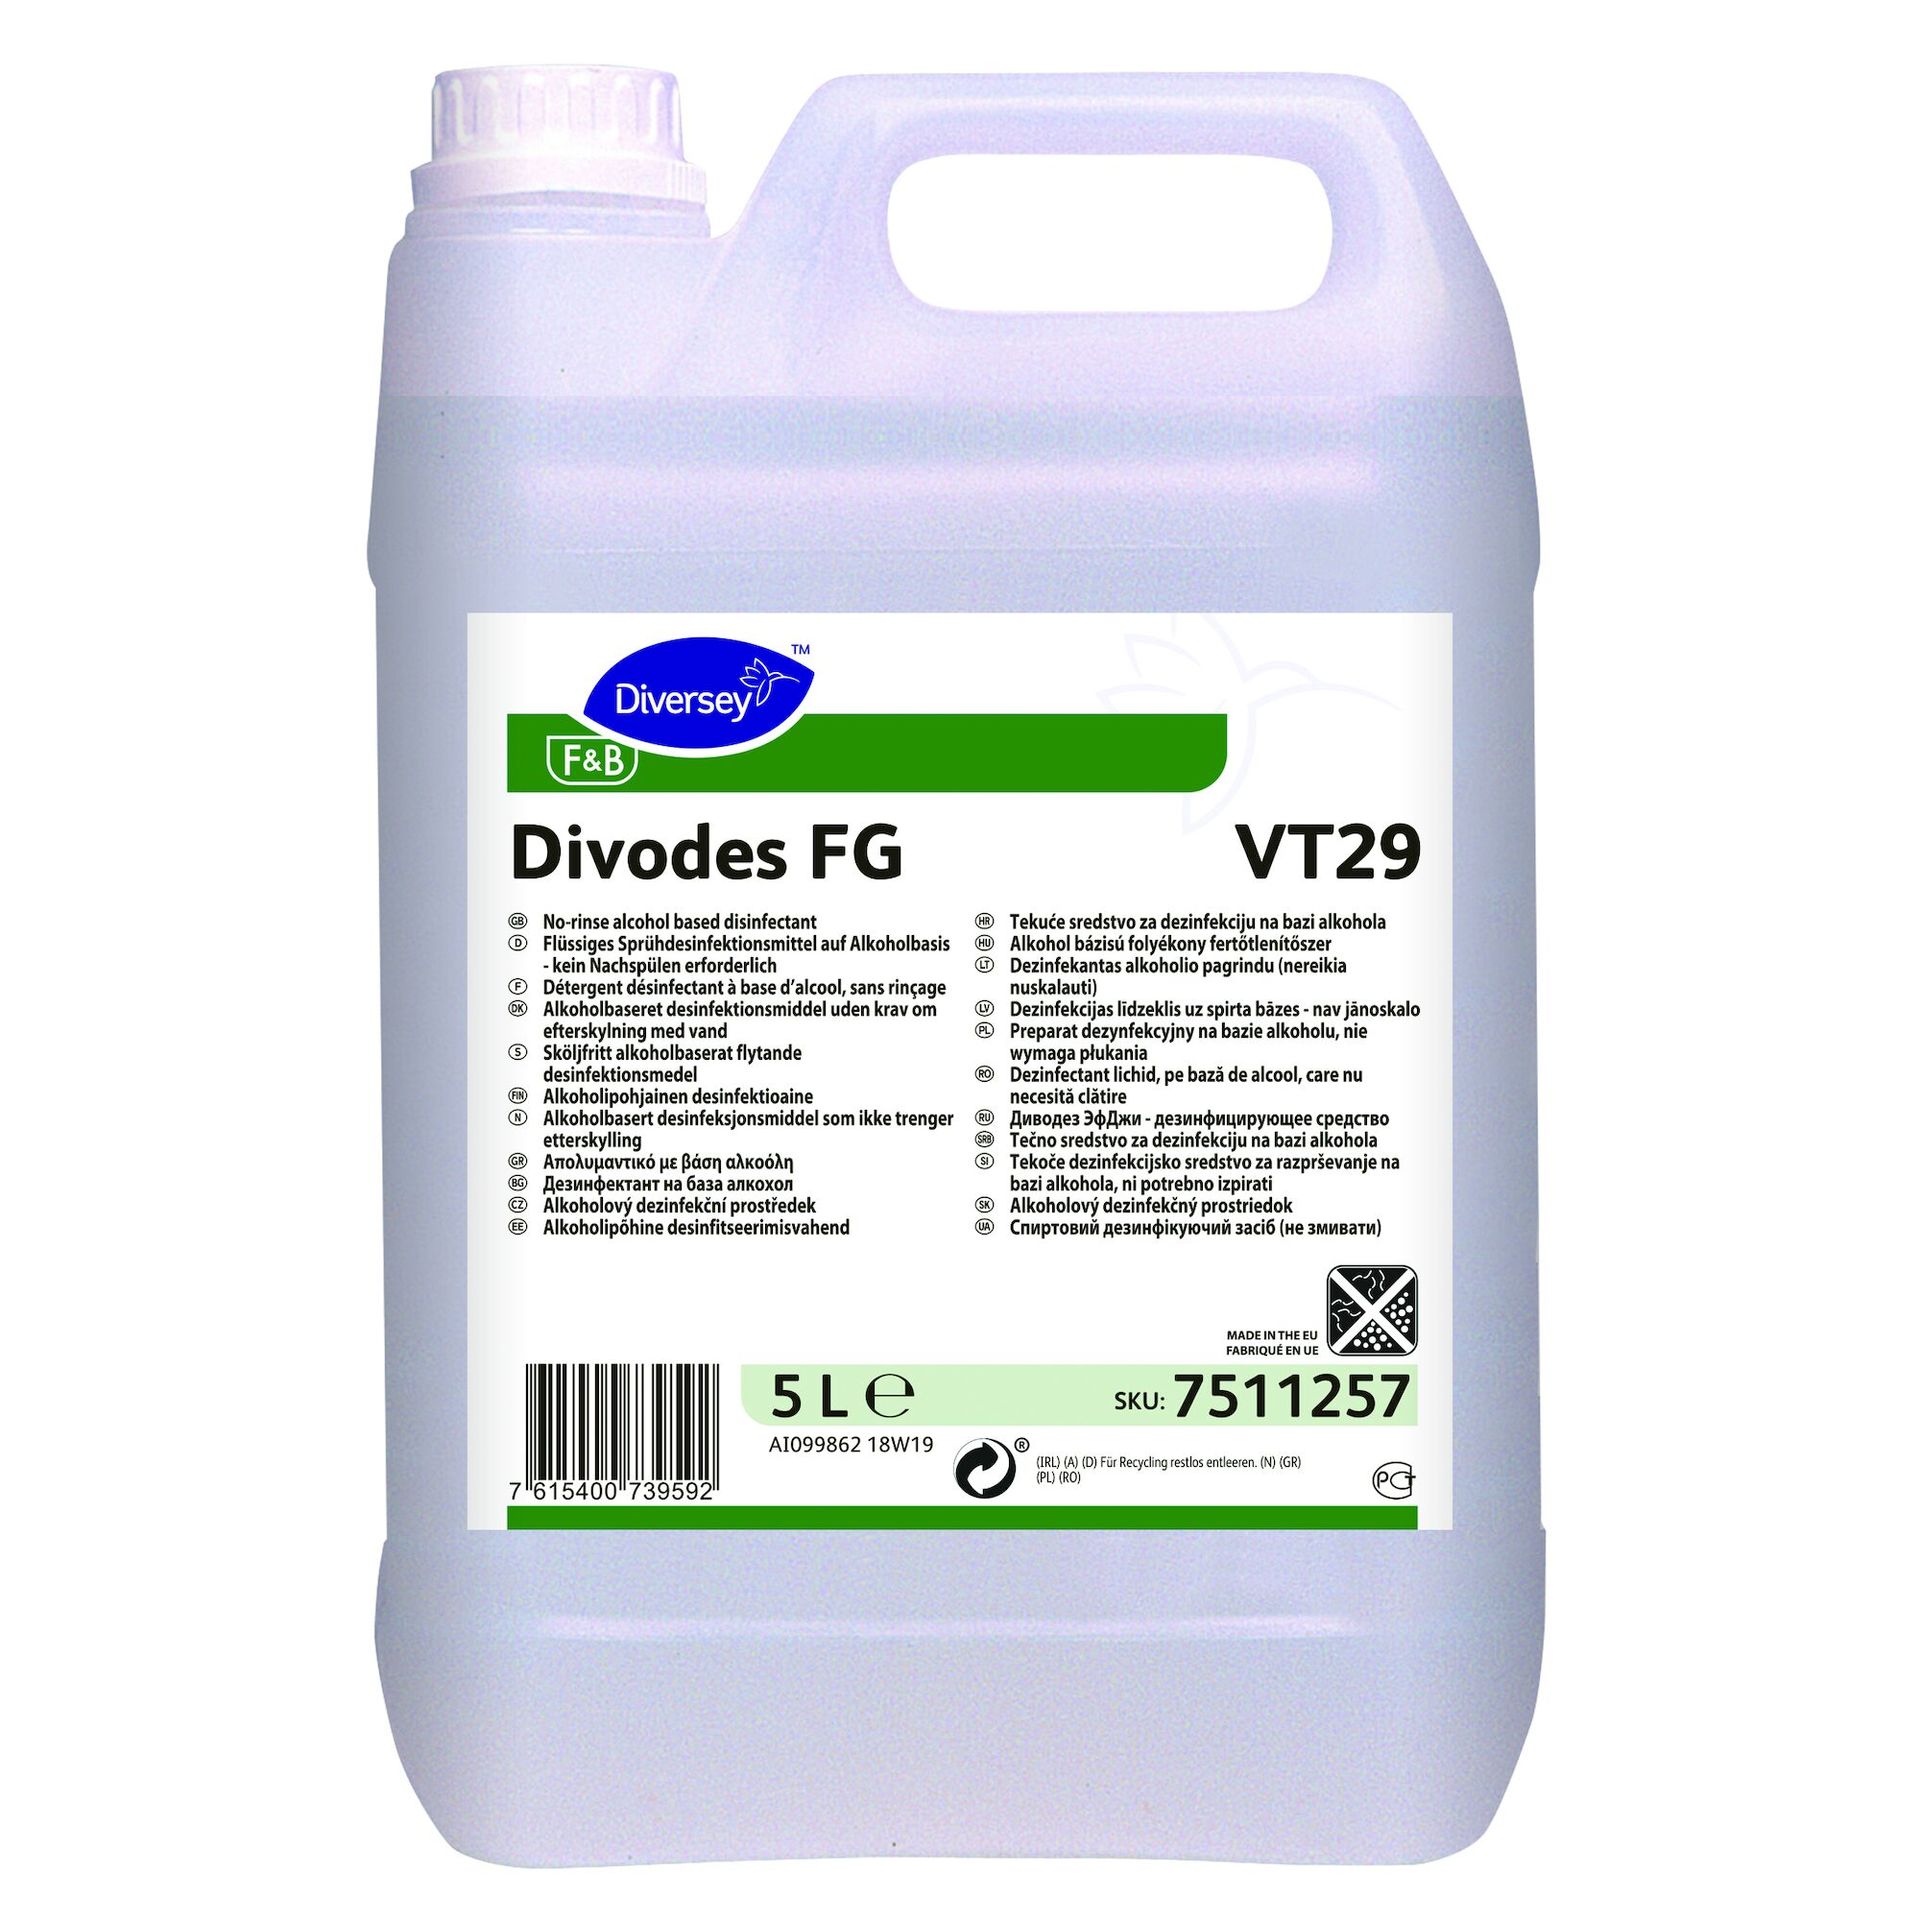 Diversey Divodes FG VT29, 5L